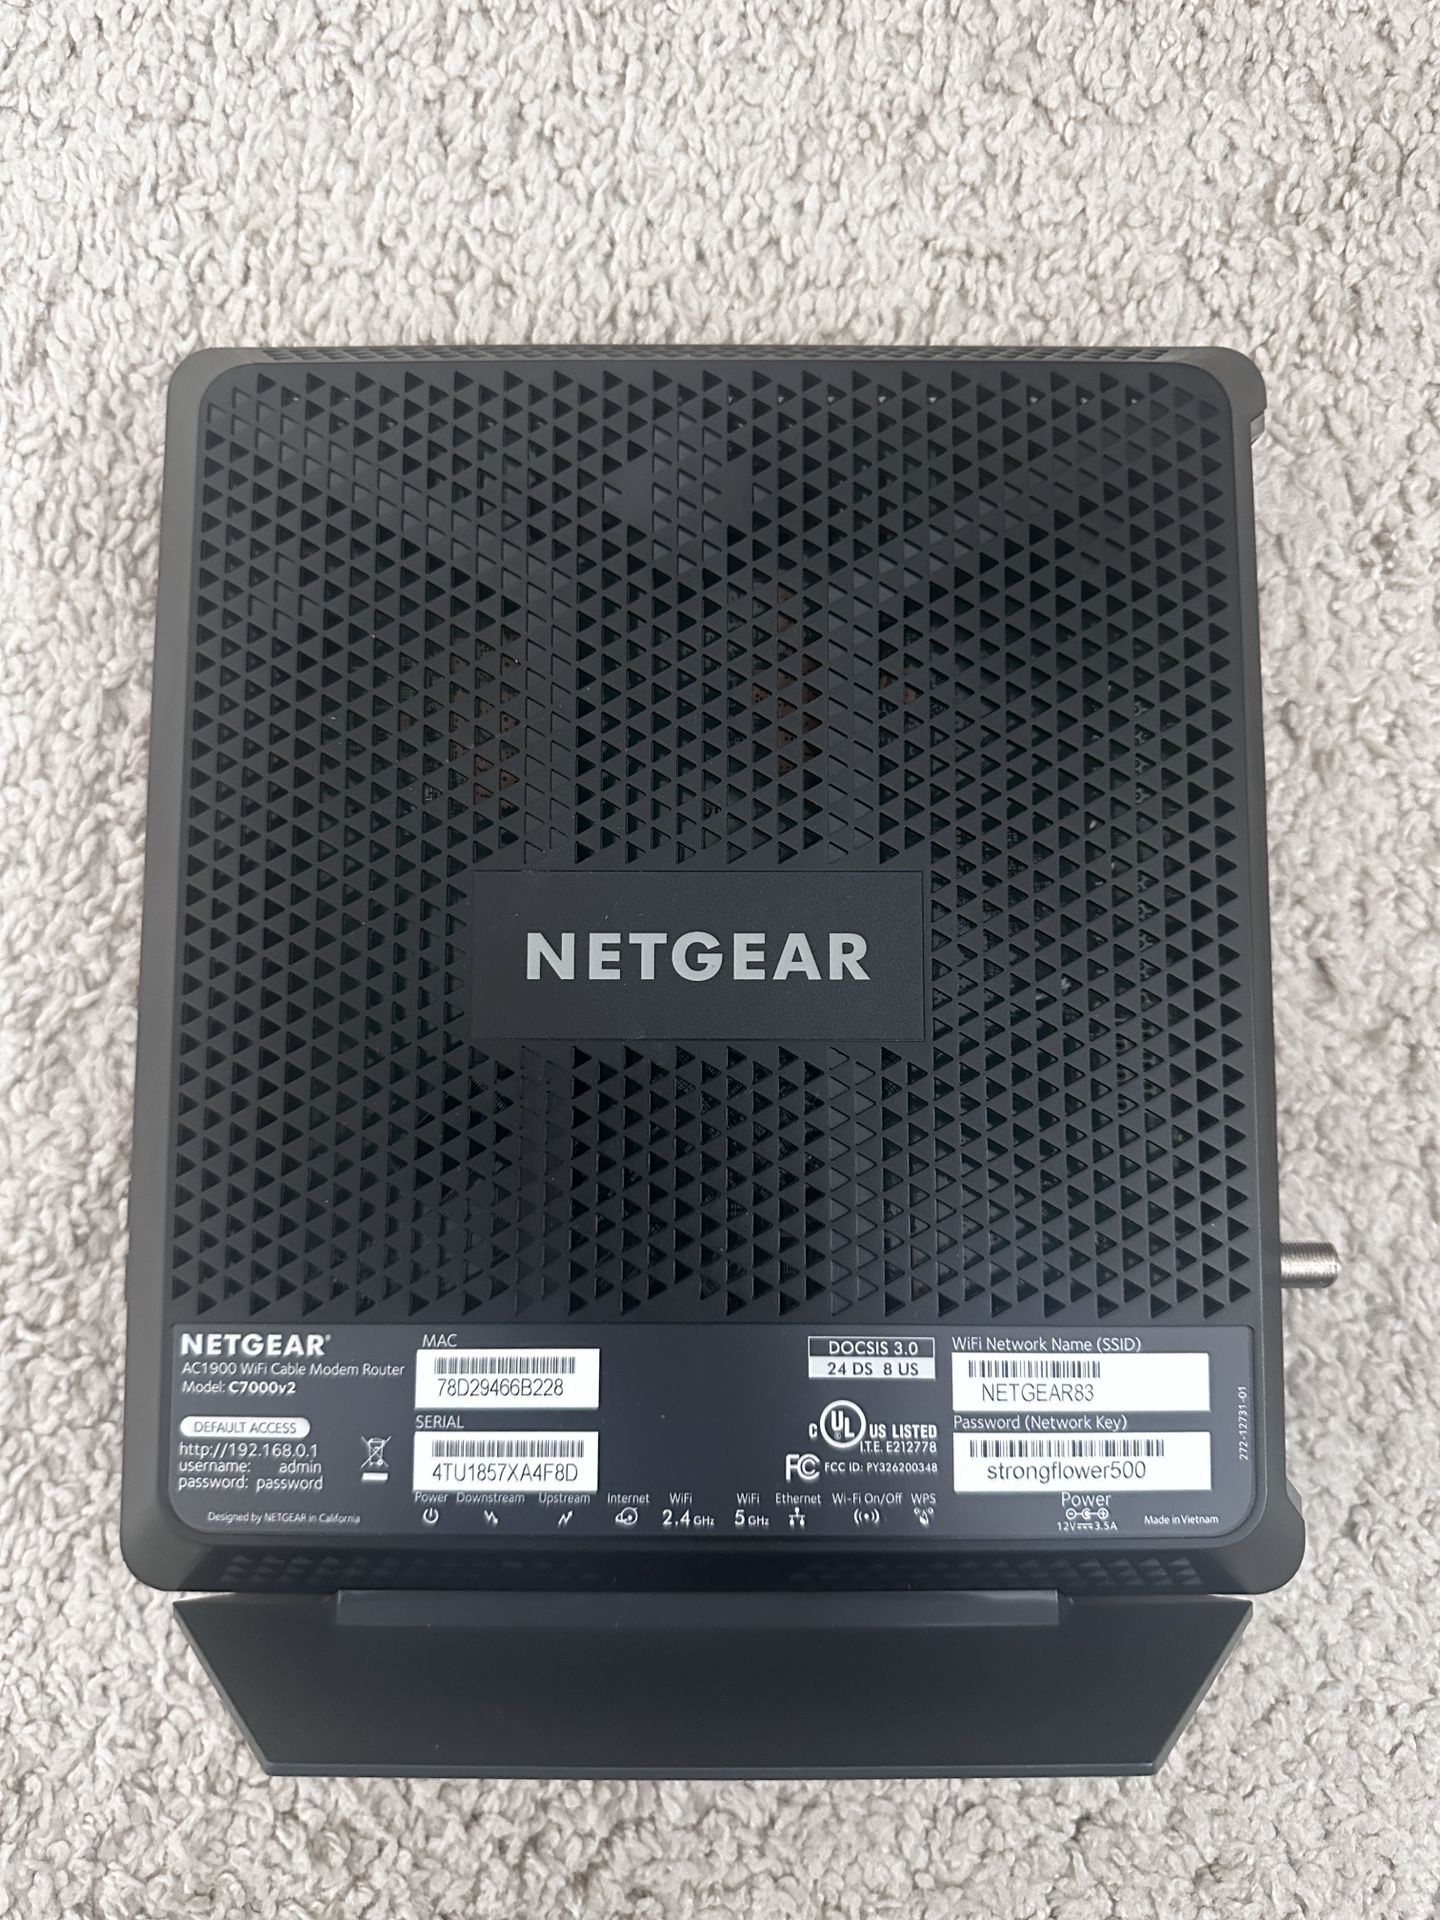 NETGEAR Nighthawk Modem Router Combo AC1900 C7000v2